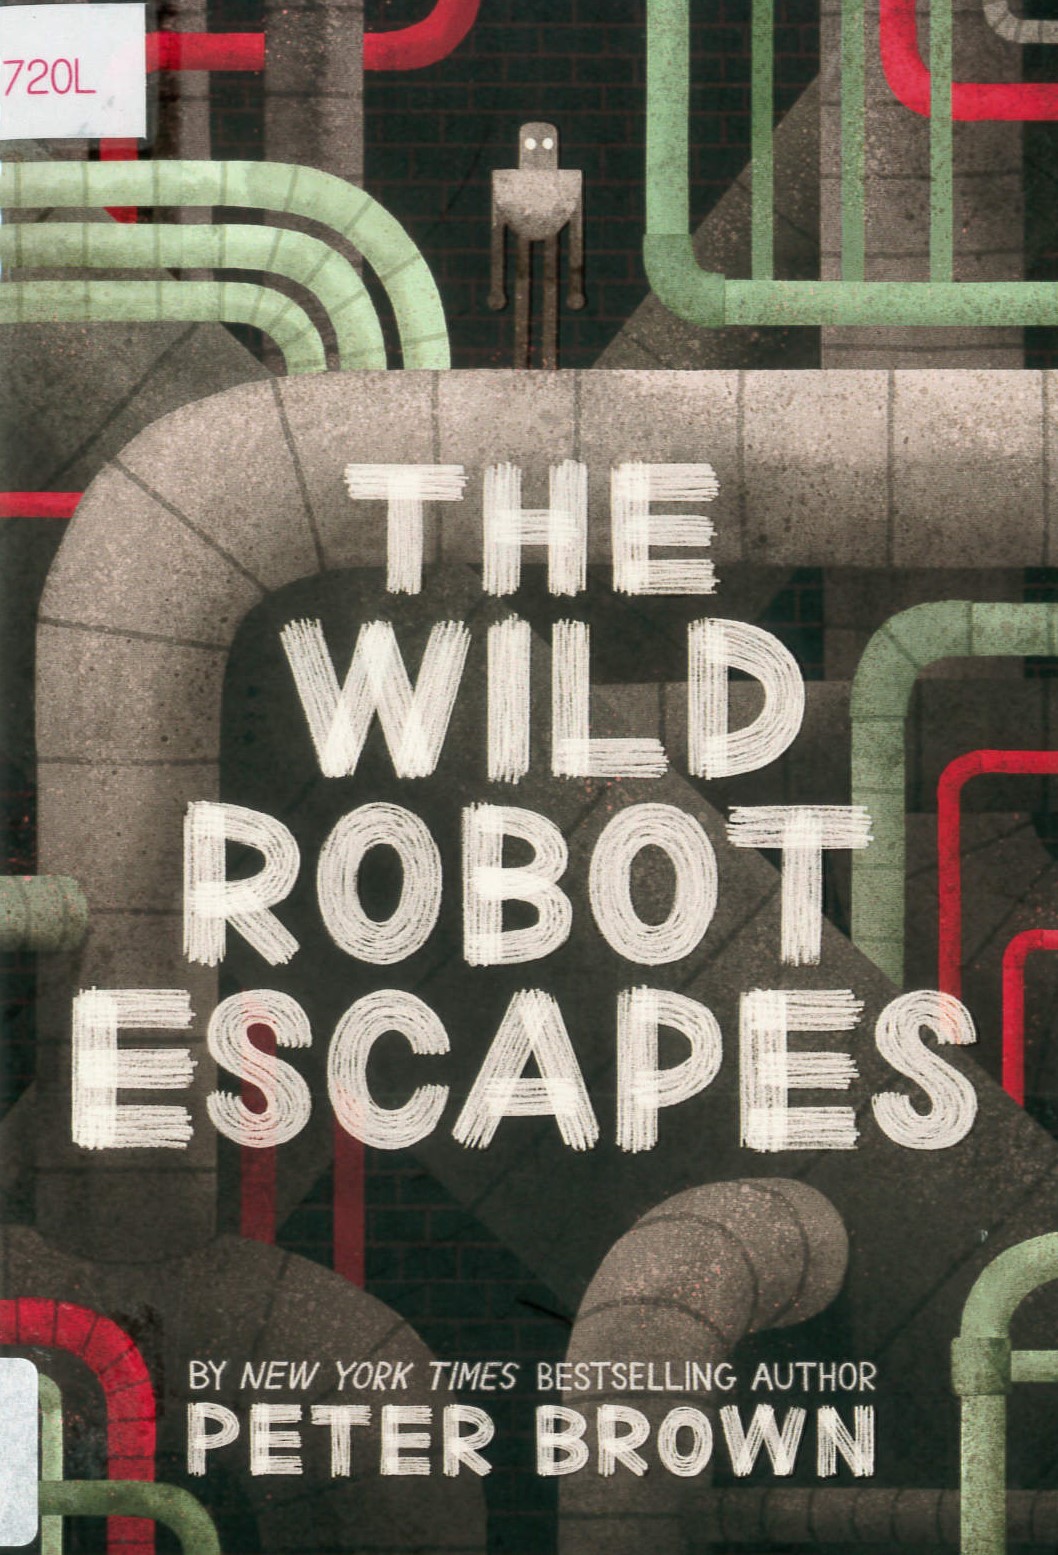 The wild robot escapes /